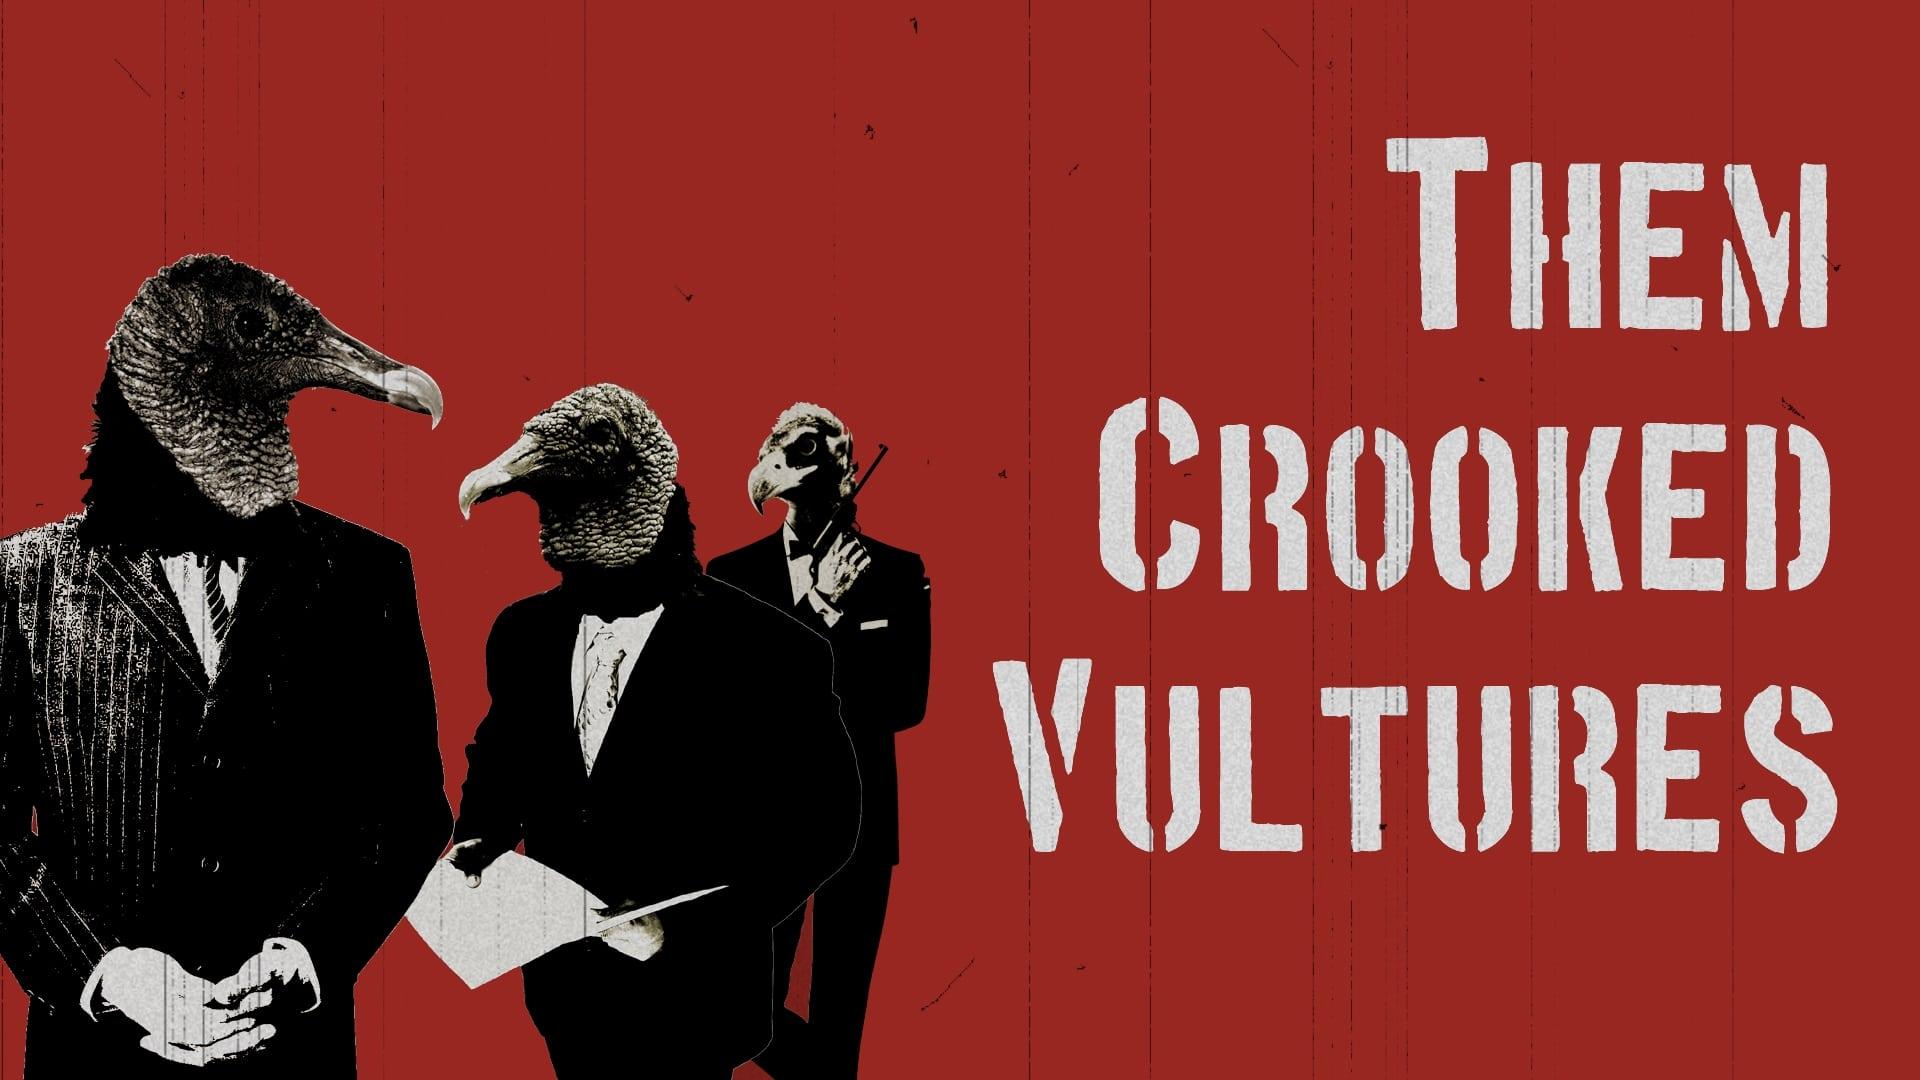 Them Crooked Vultures Austin City Limits backdrop